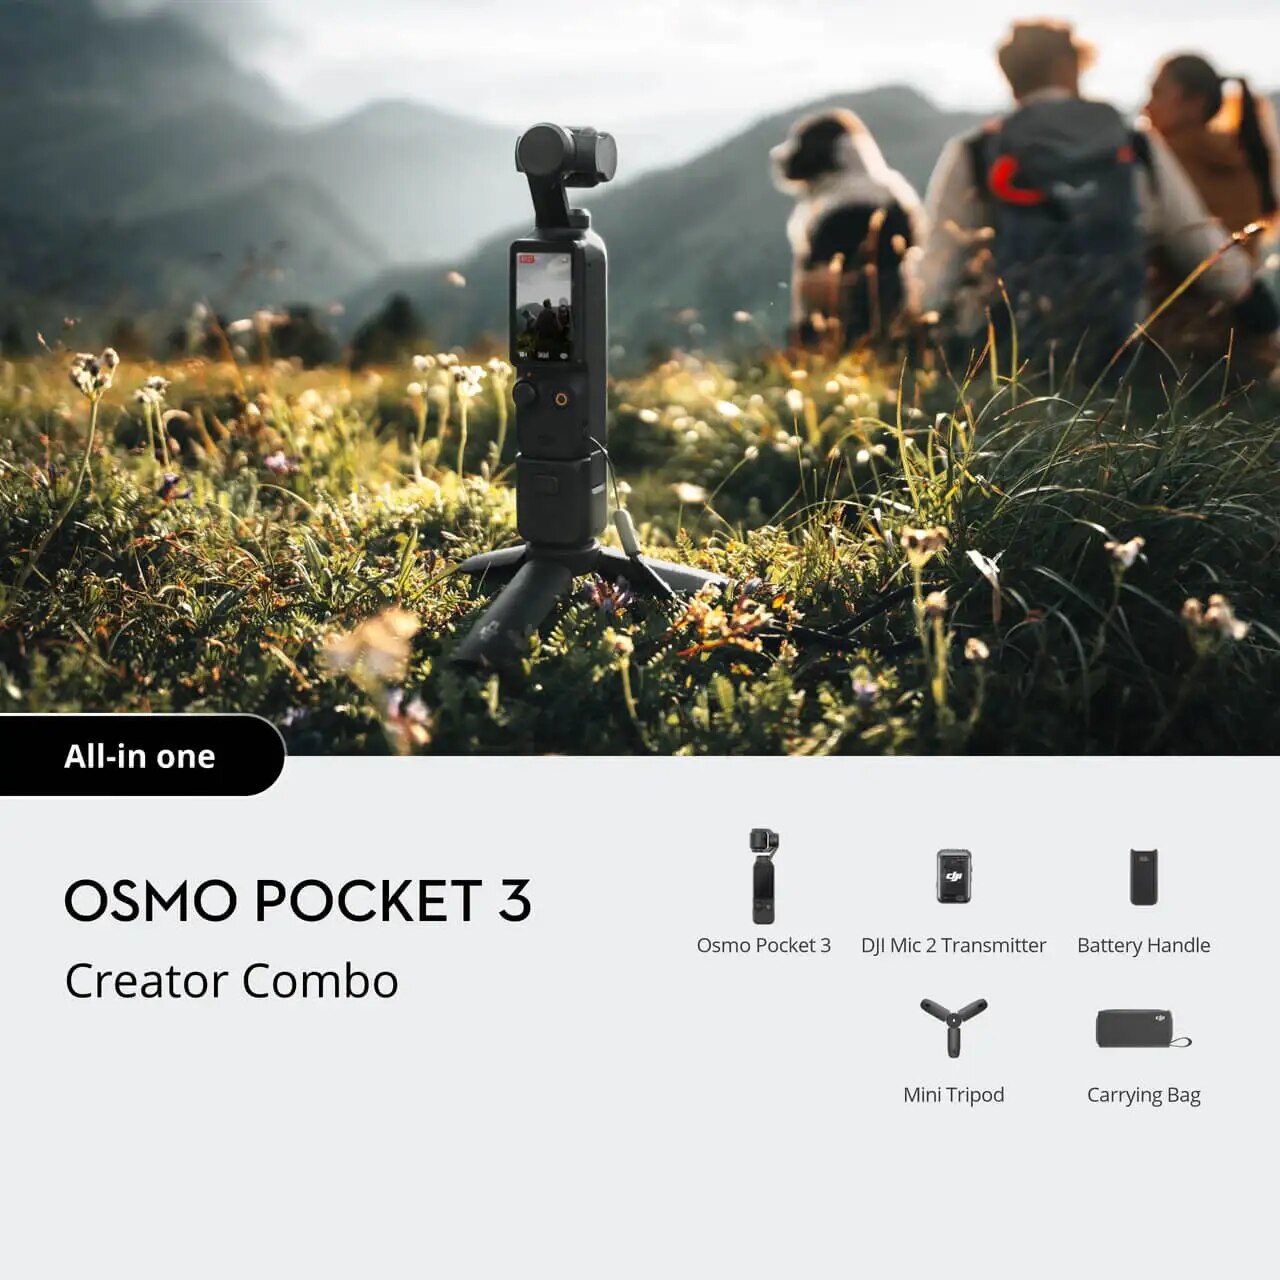 DJI Osmo Pocket 3, Osmo Pocket 3 DJI Mic 2 Transmitter Battery Handle Creator Combo